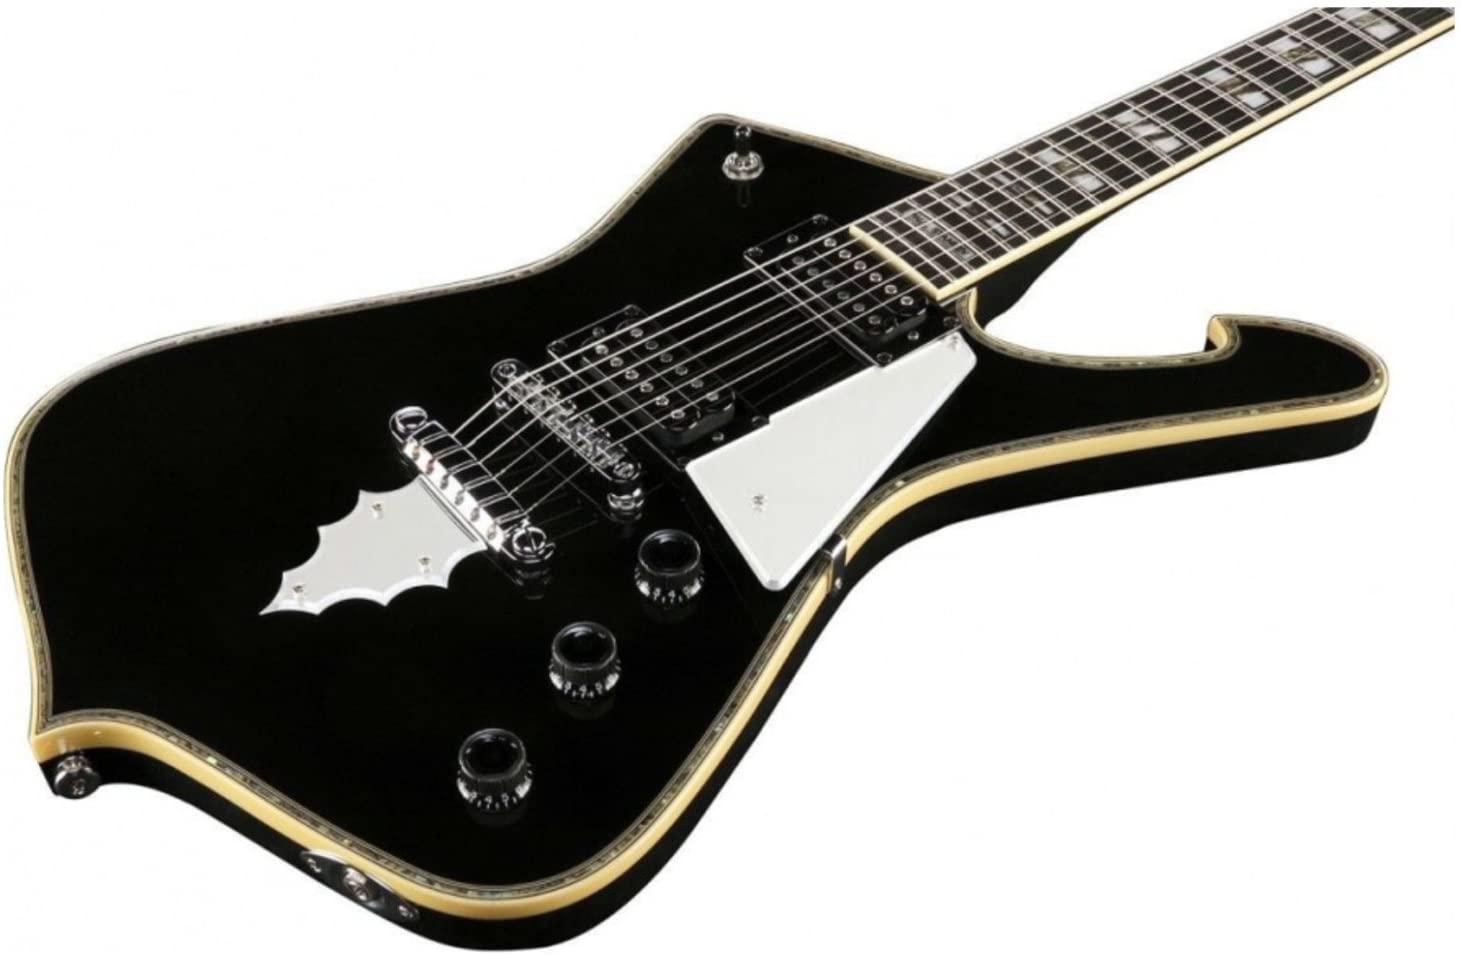 Ibañez - Guitarra Eléctrica Paul Stanley con Funda, Color: Negra Mod.PS120-BK_94